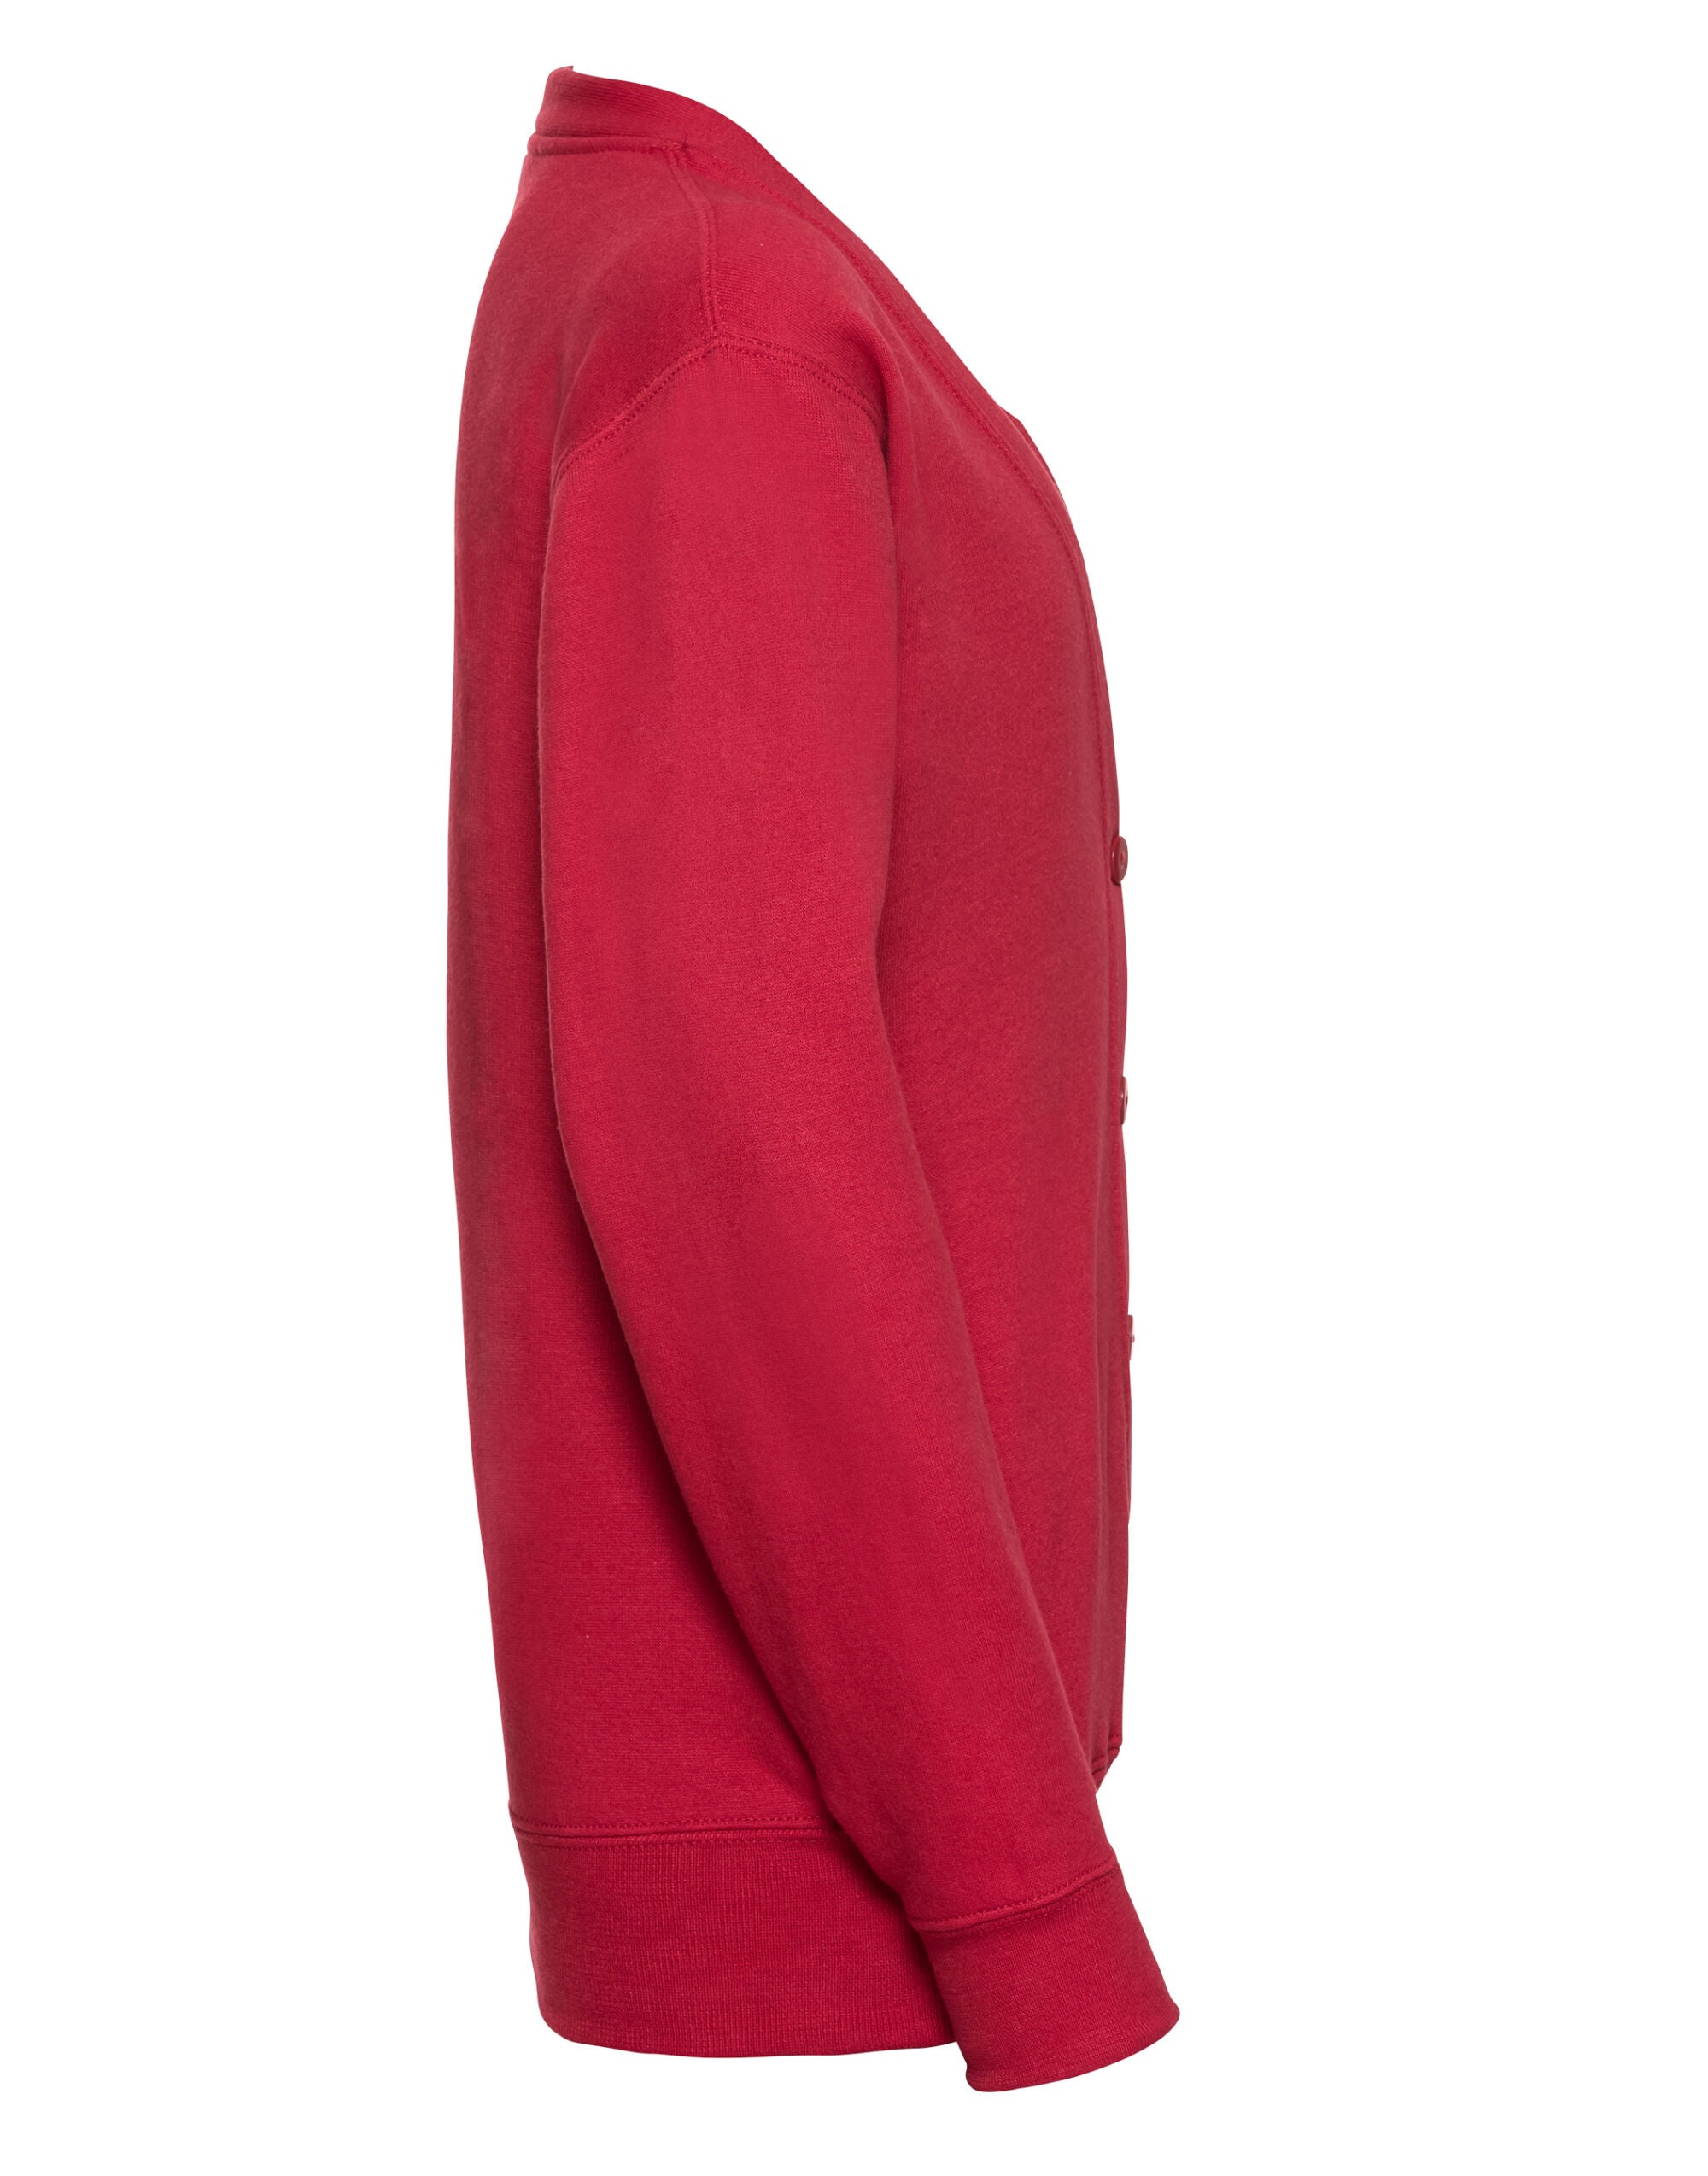 Russell Jerzees Schoolgear Children's Sweatshirt Cardigan This v-neck sweat combines smartness with style and comfort (273B)